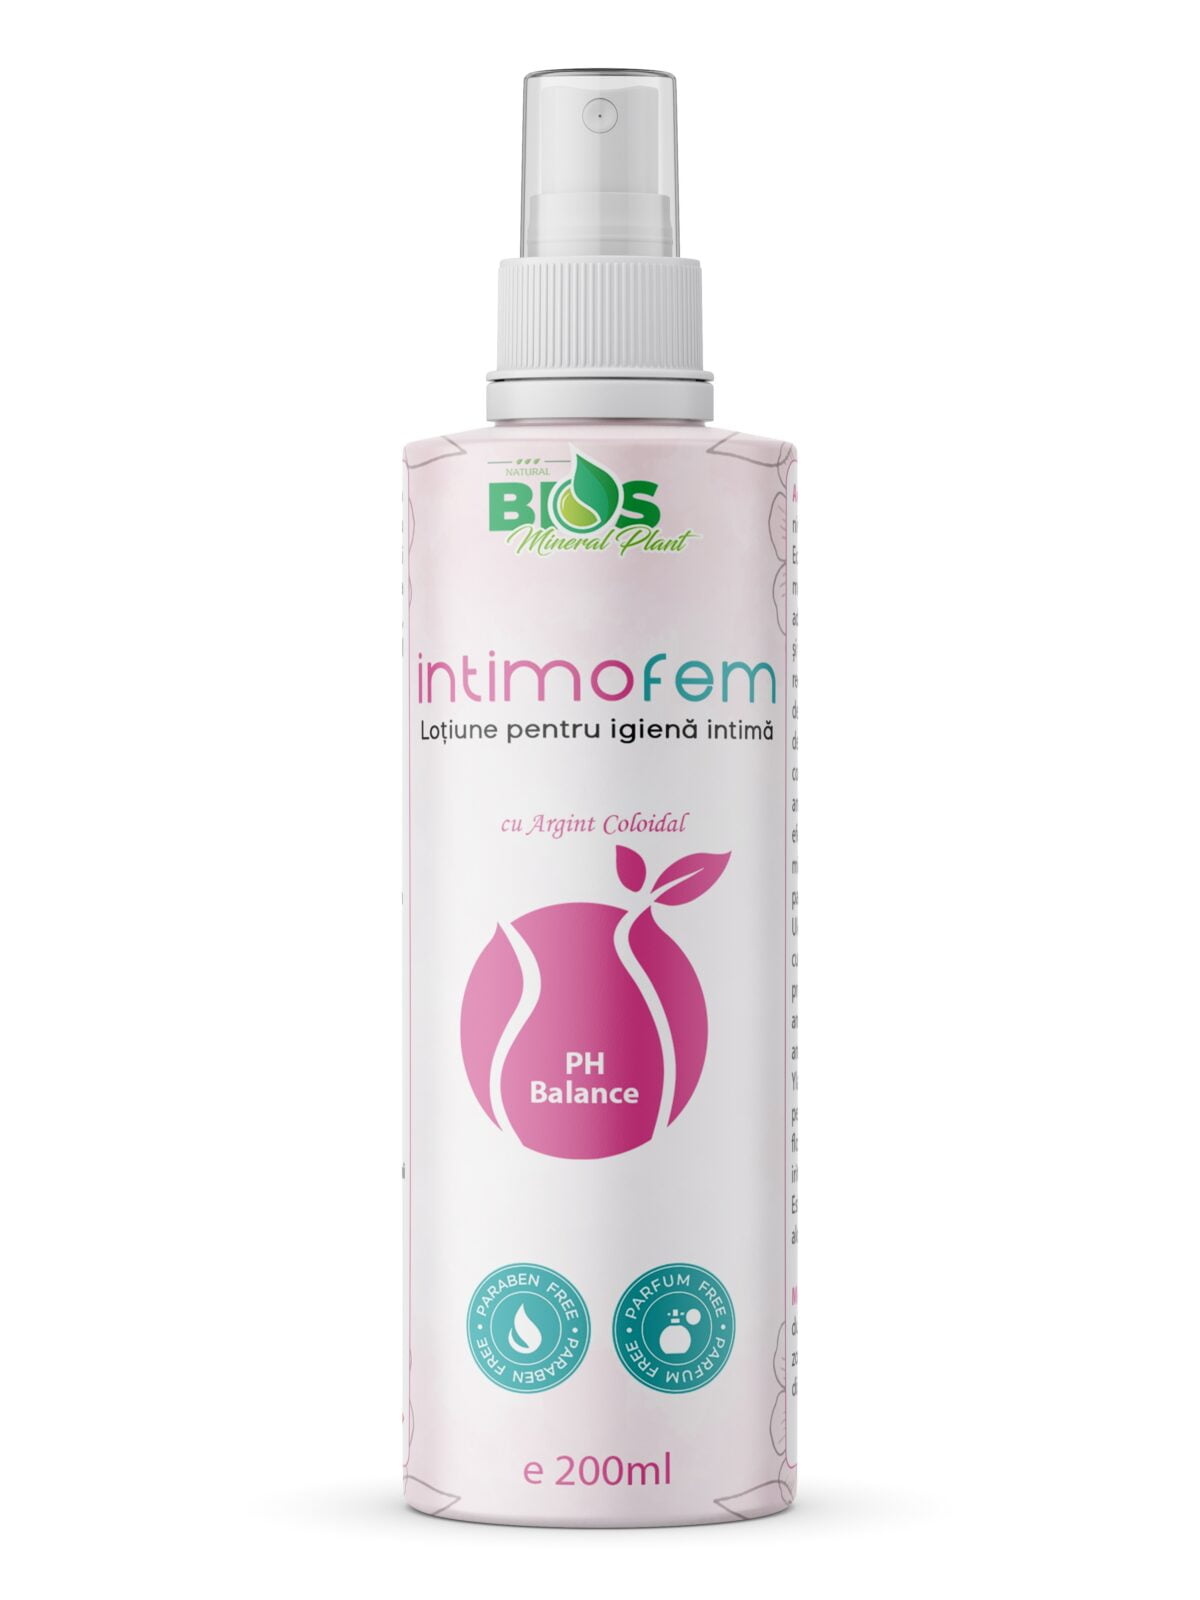 Intimo Ferm - Lotiune pentru igiena intima, 200ml, Bios Mineral Plant